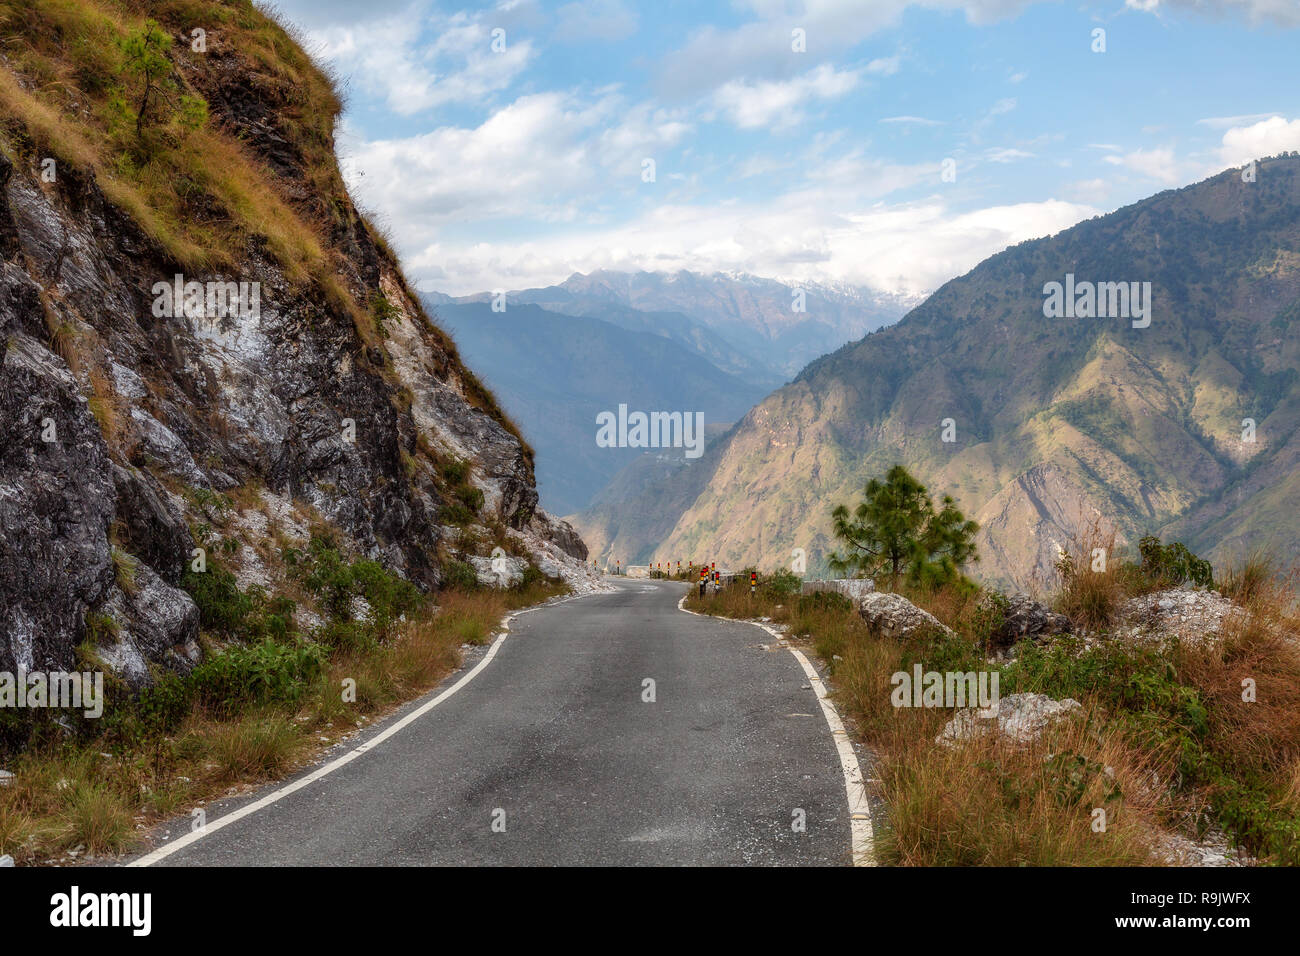 Himalaya mountain road on way from Kausani to Munsiyari at Uttarakhand India with scenic landscape Stock Photo